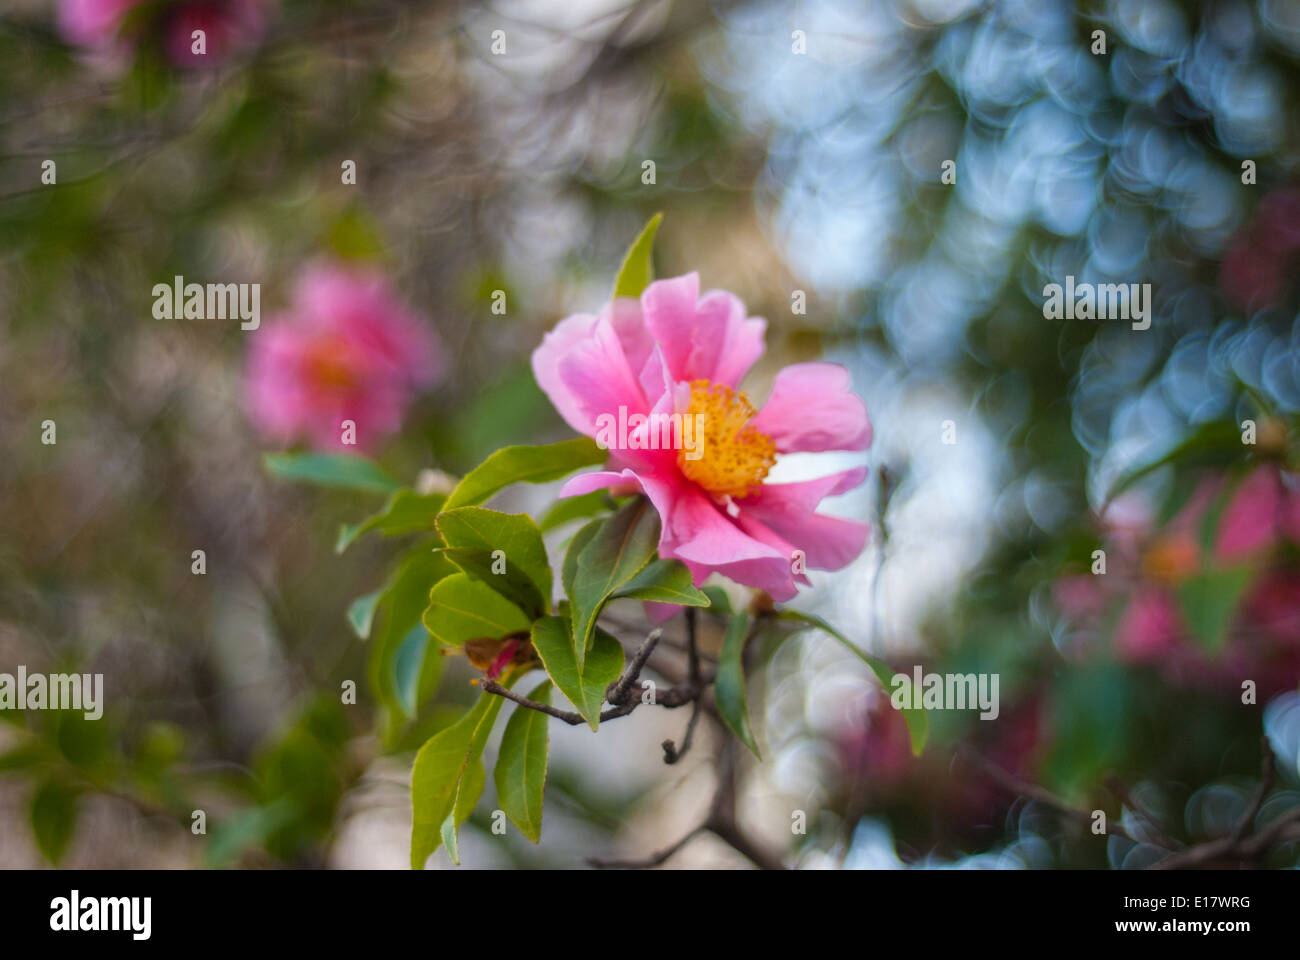 Rosa peonia giapponese fiore Foto Stock